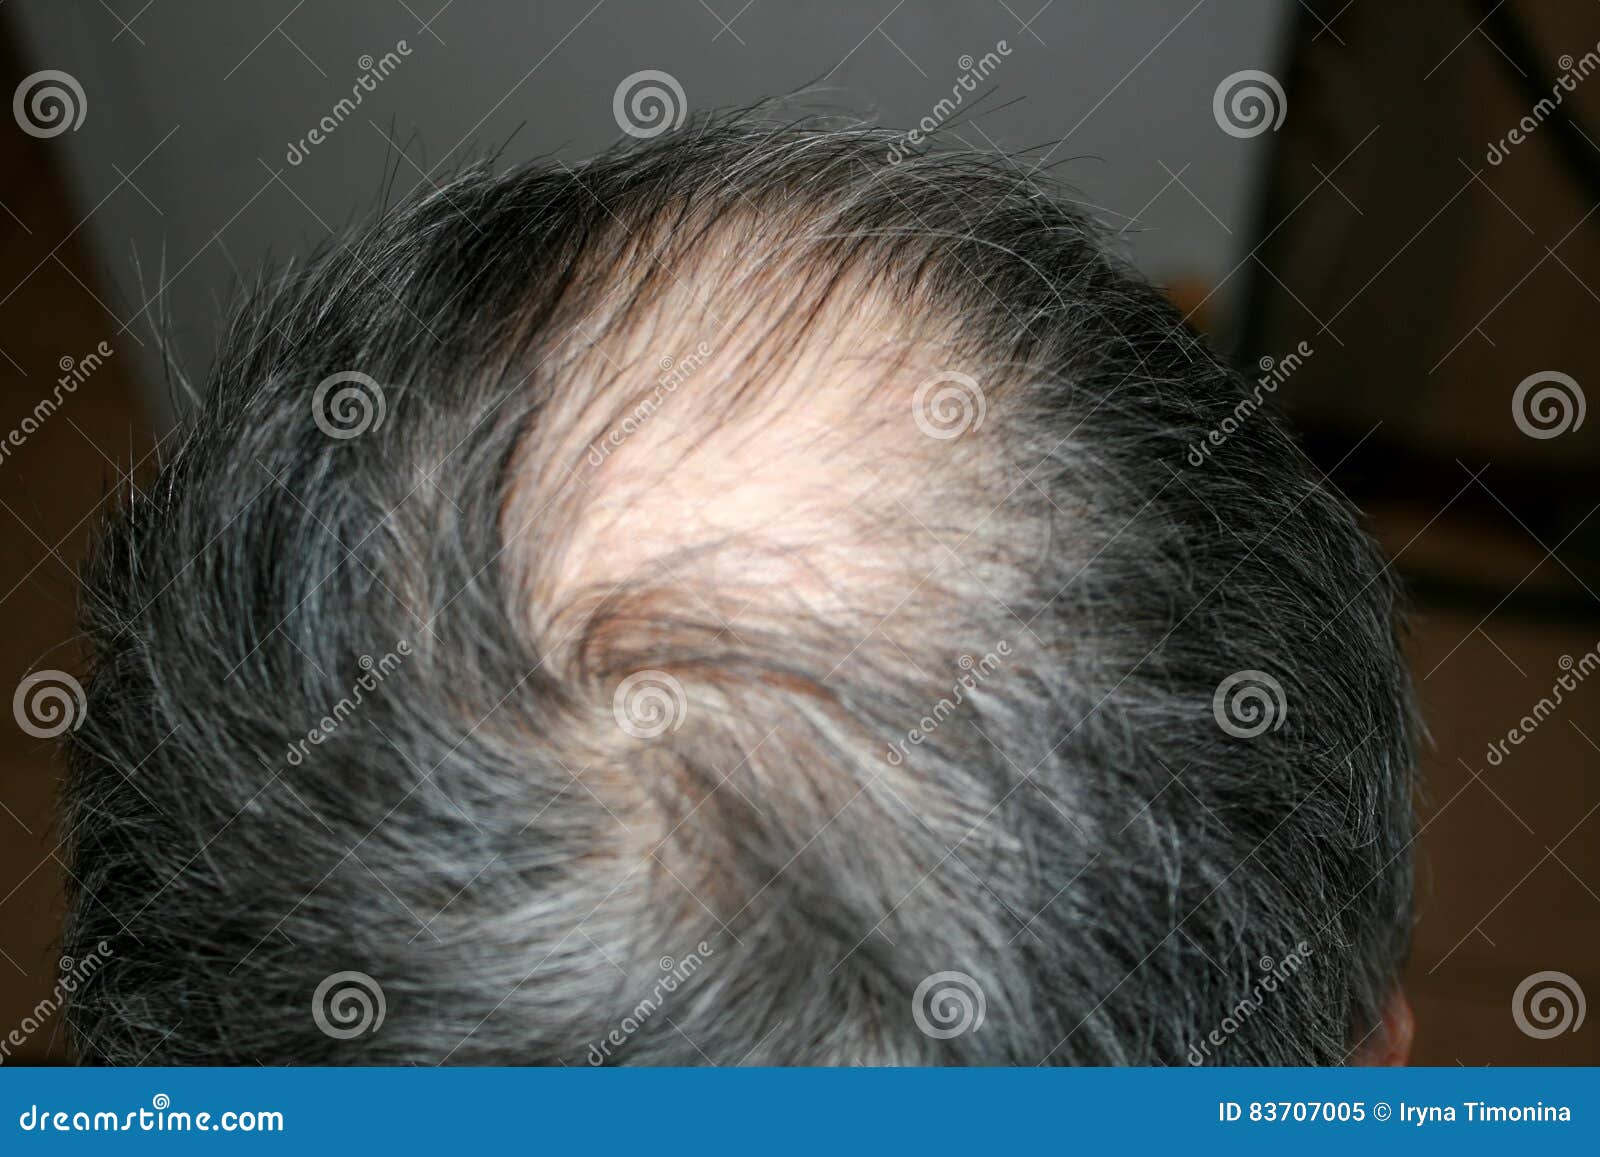 bald head of a man. receding hairline.